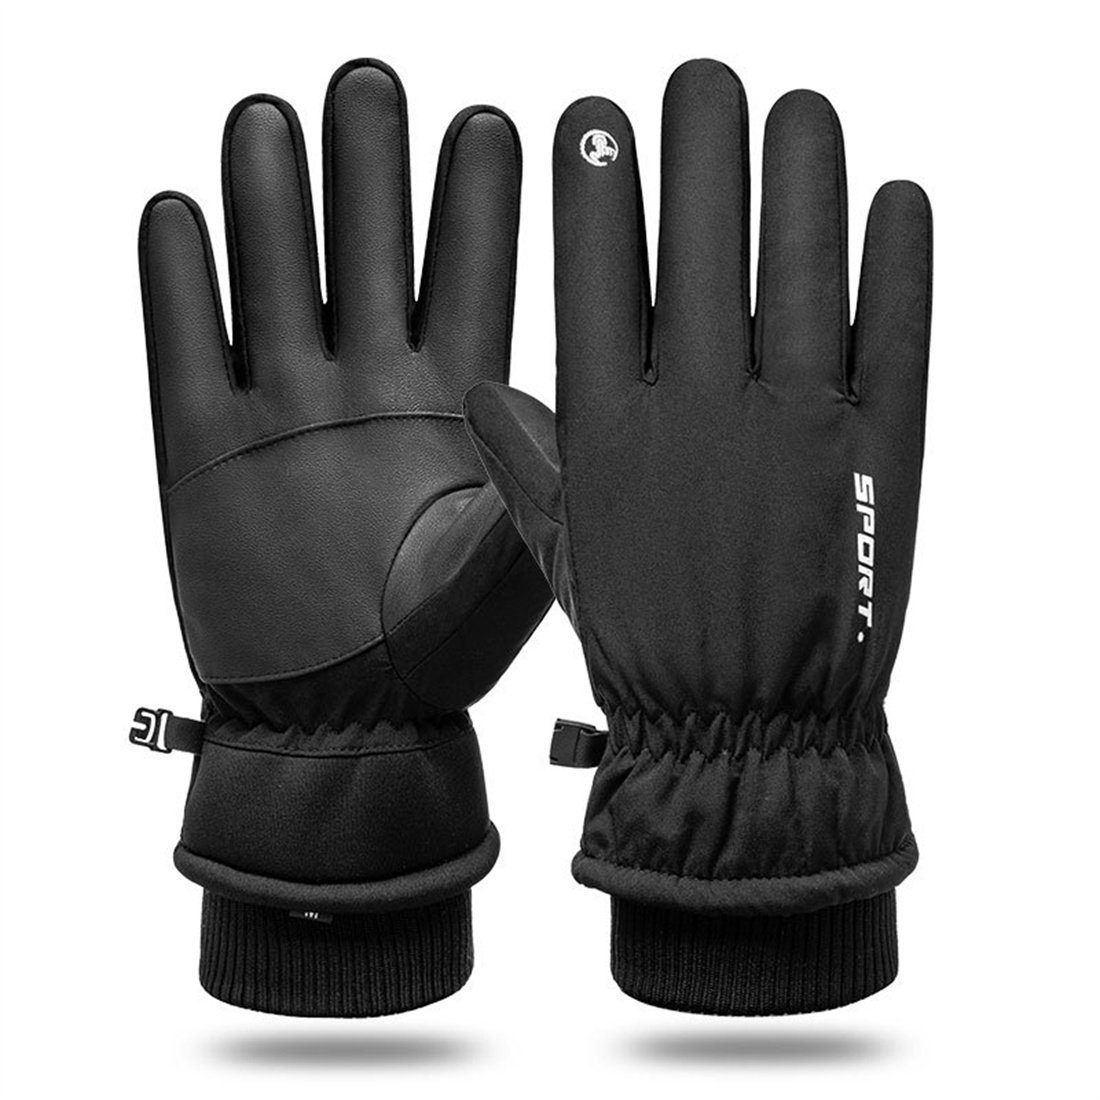 DÖRÖY Skihandschuhe Winddichte Winter-Skihandschuhe,warme Handschuhe mitTouchscreen,unisex Schwarz